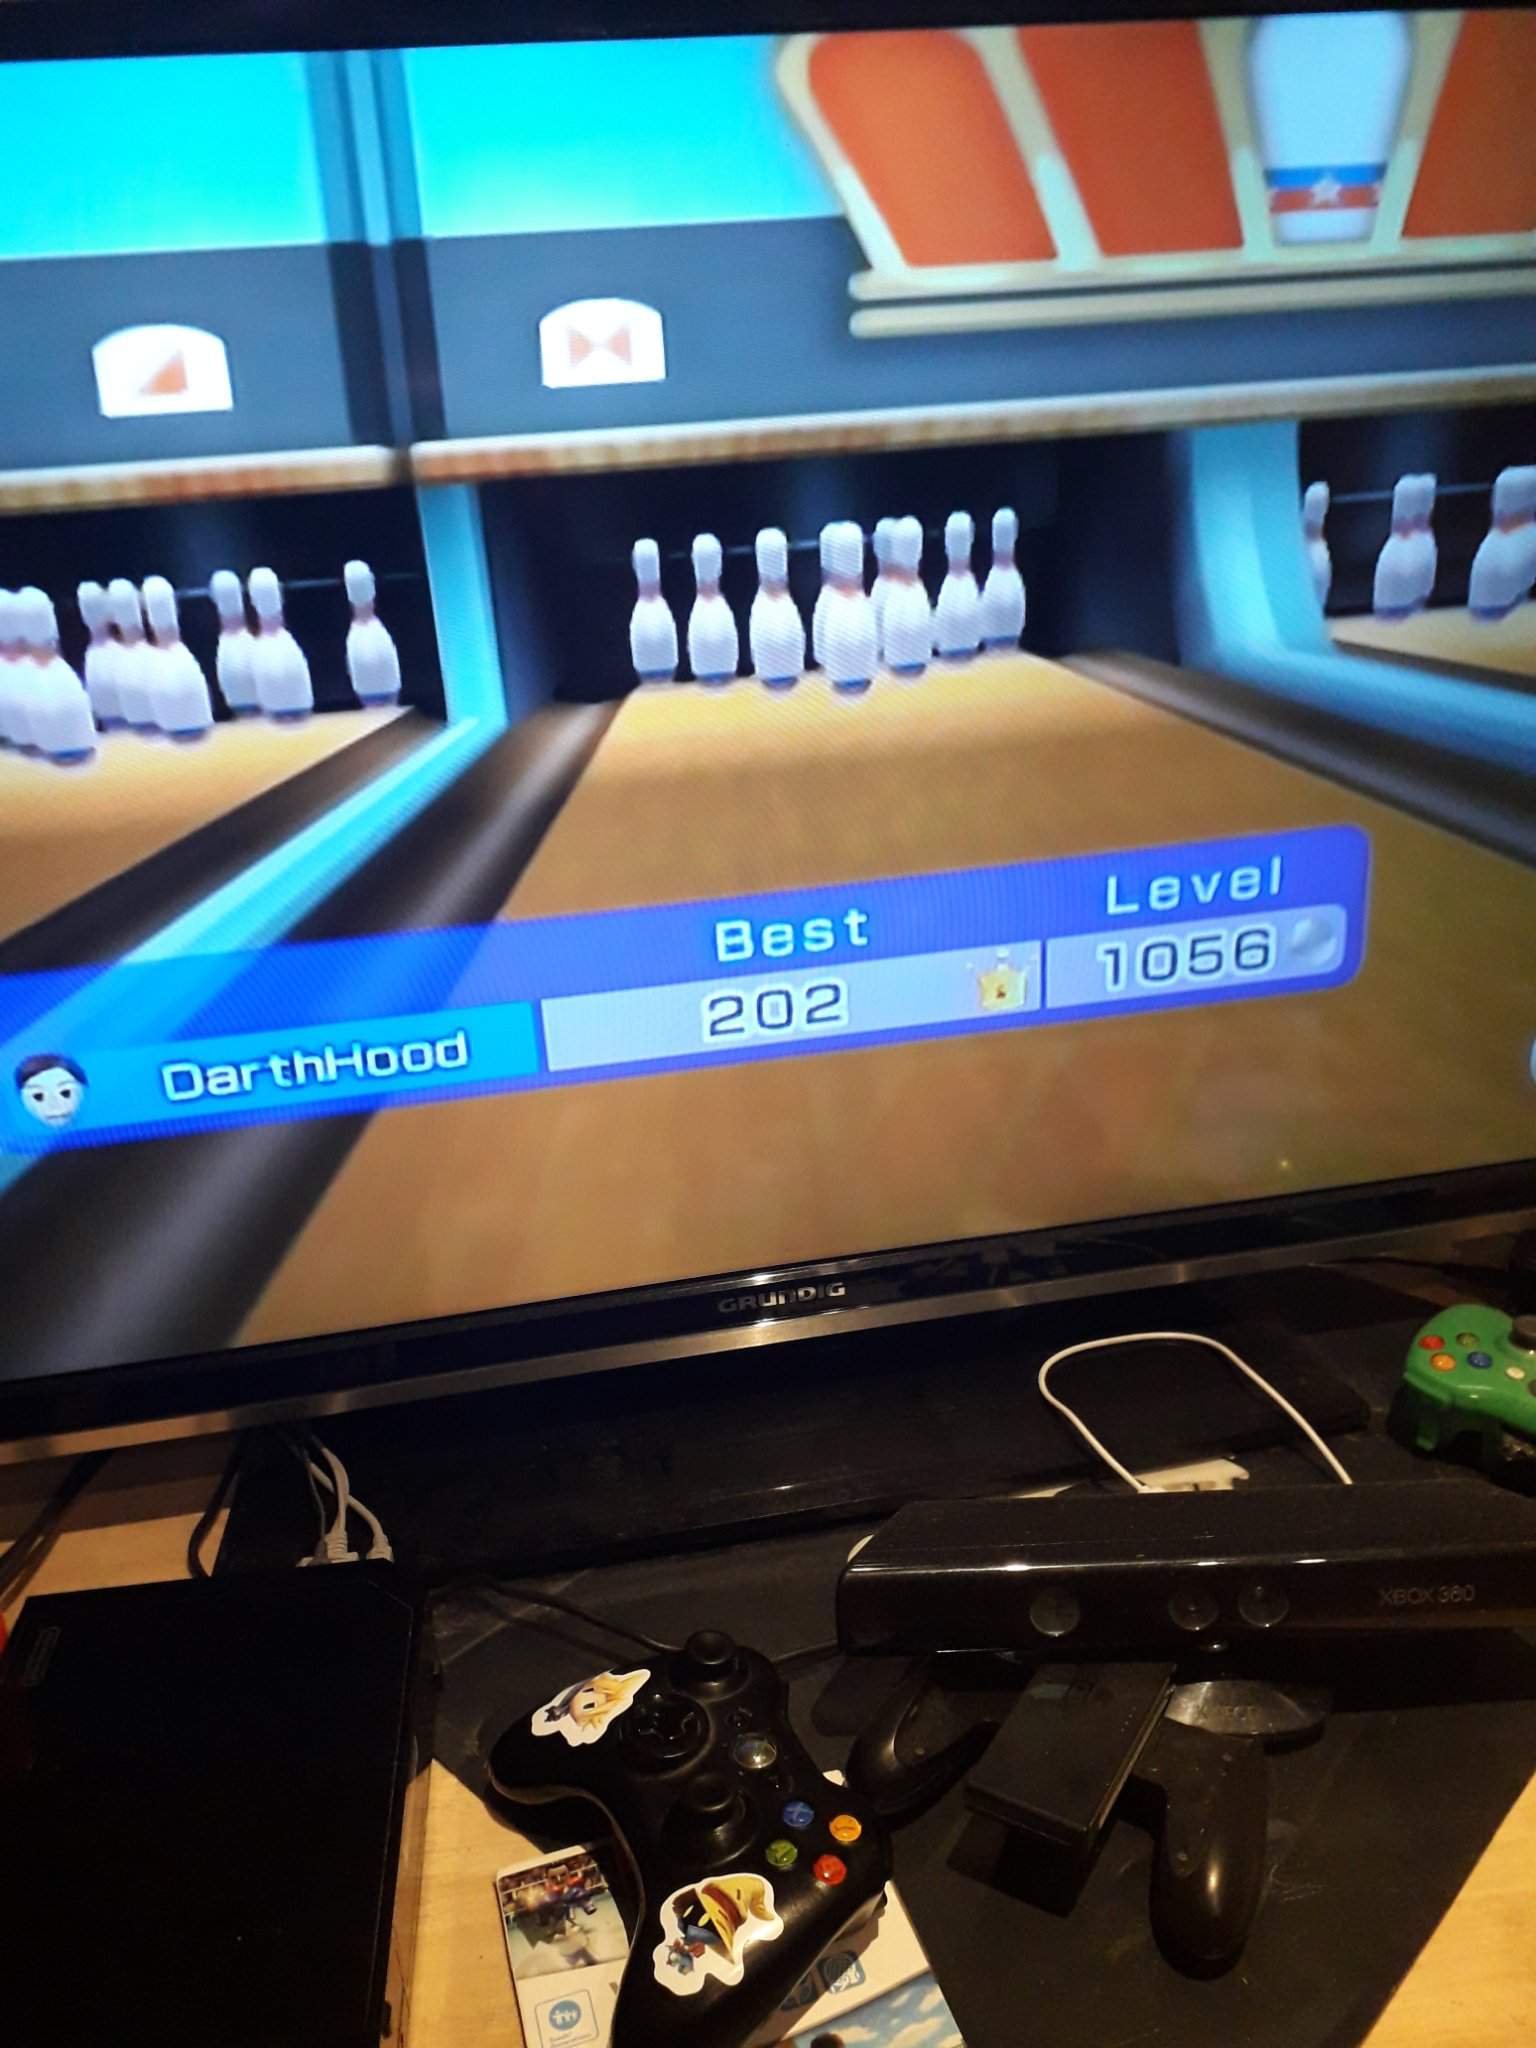 wii sports resort emulator mac bowling